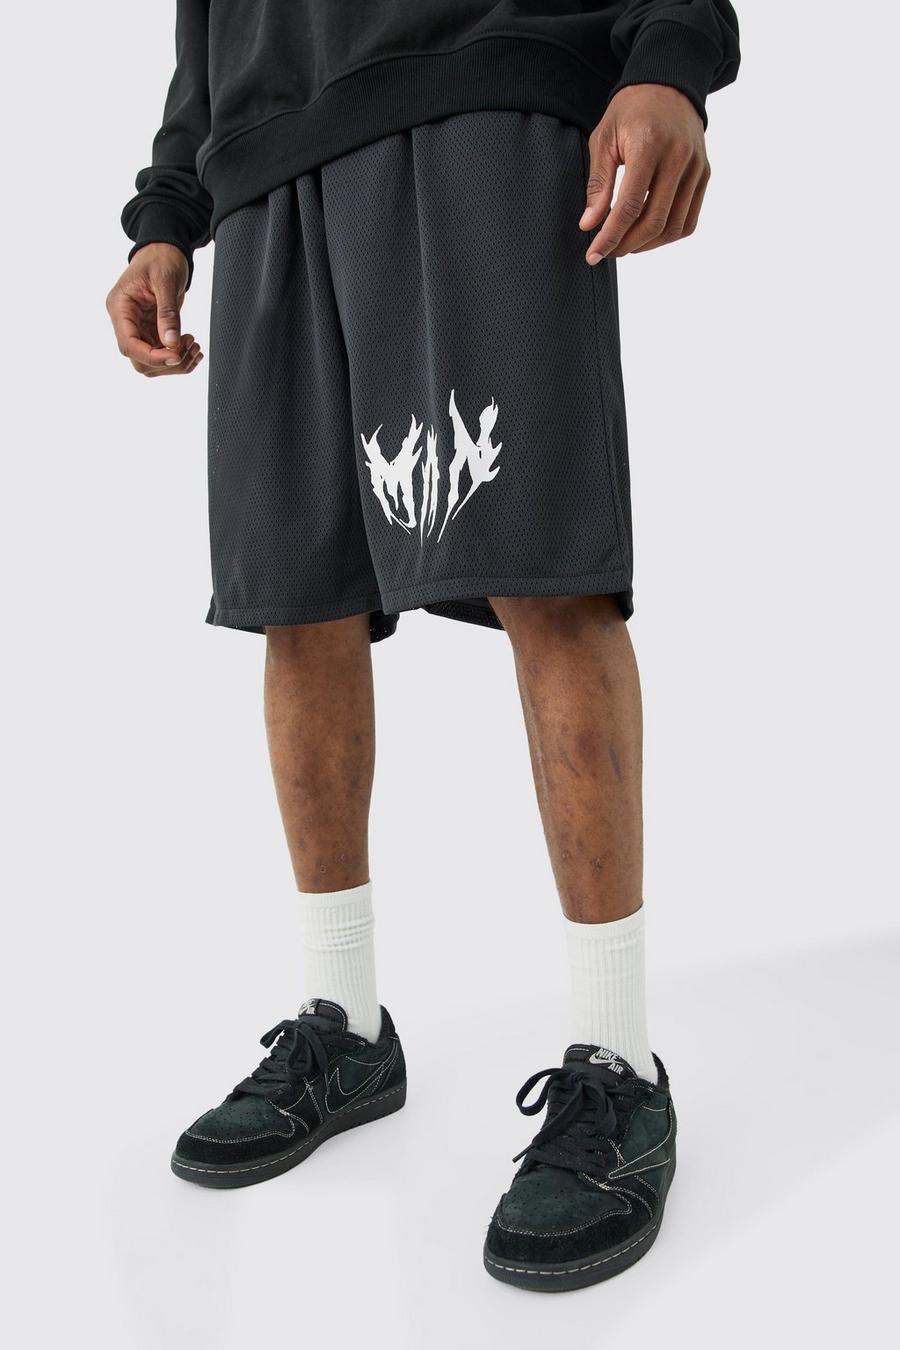 Pantaloncini da basket Tall Man in Airtex, Black